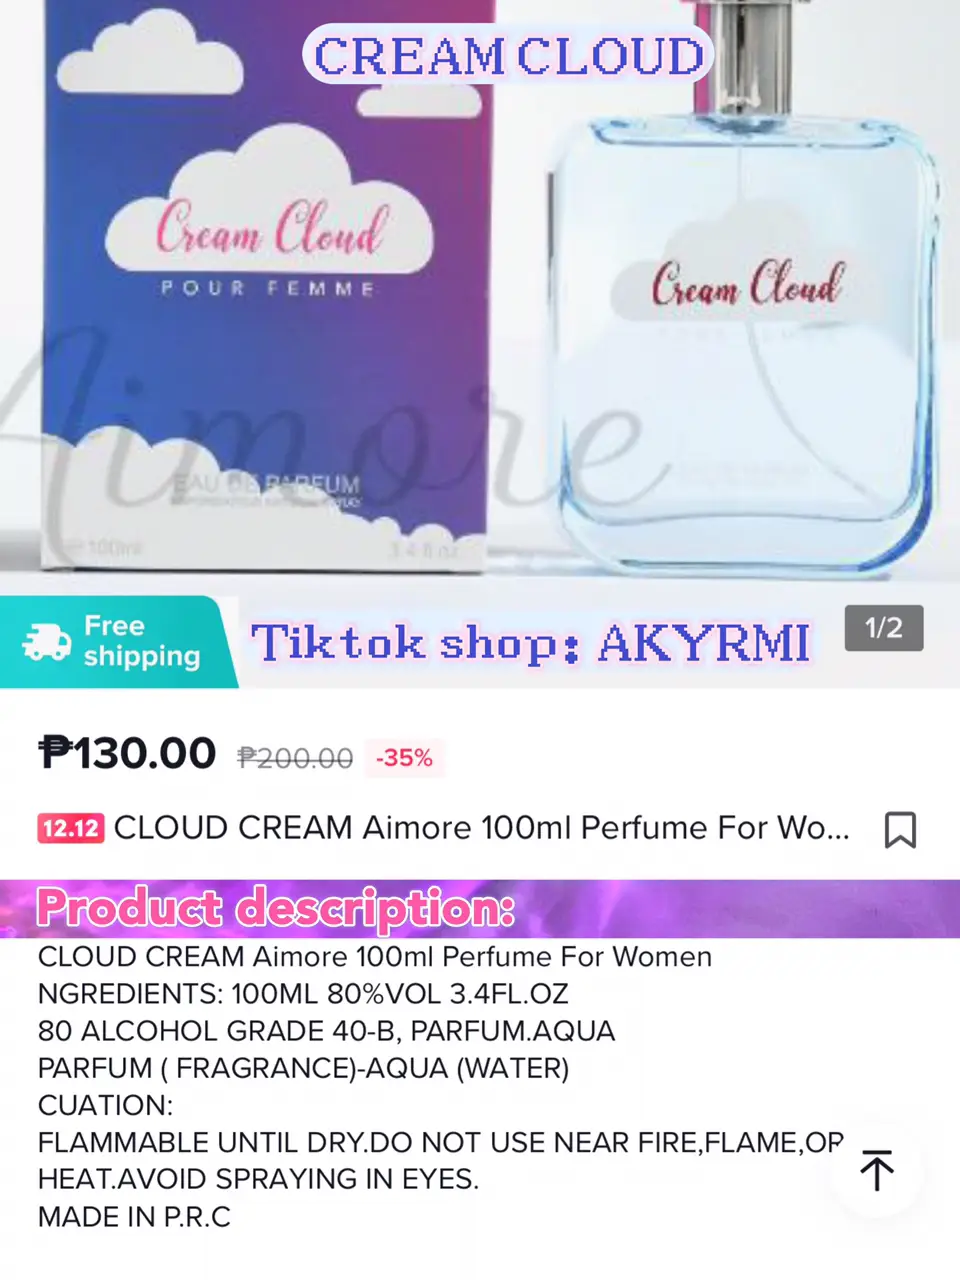 BEWARE of fake cream cloud perfumes online! 🙆‍♀️ #akrymi #akrymiaimor